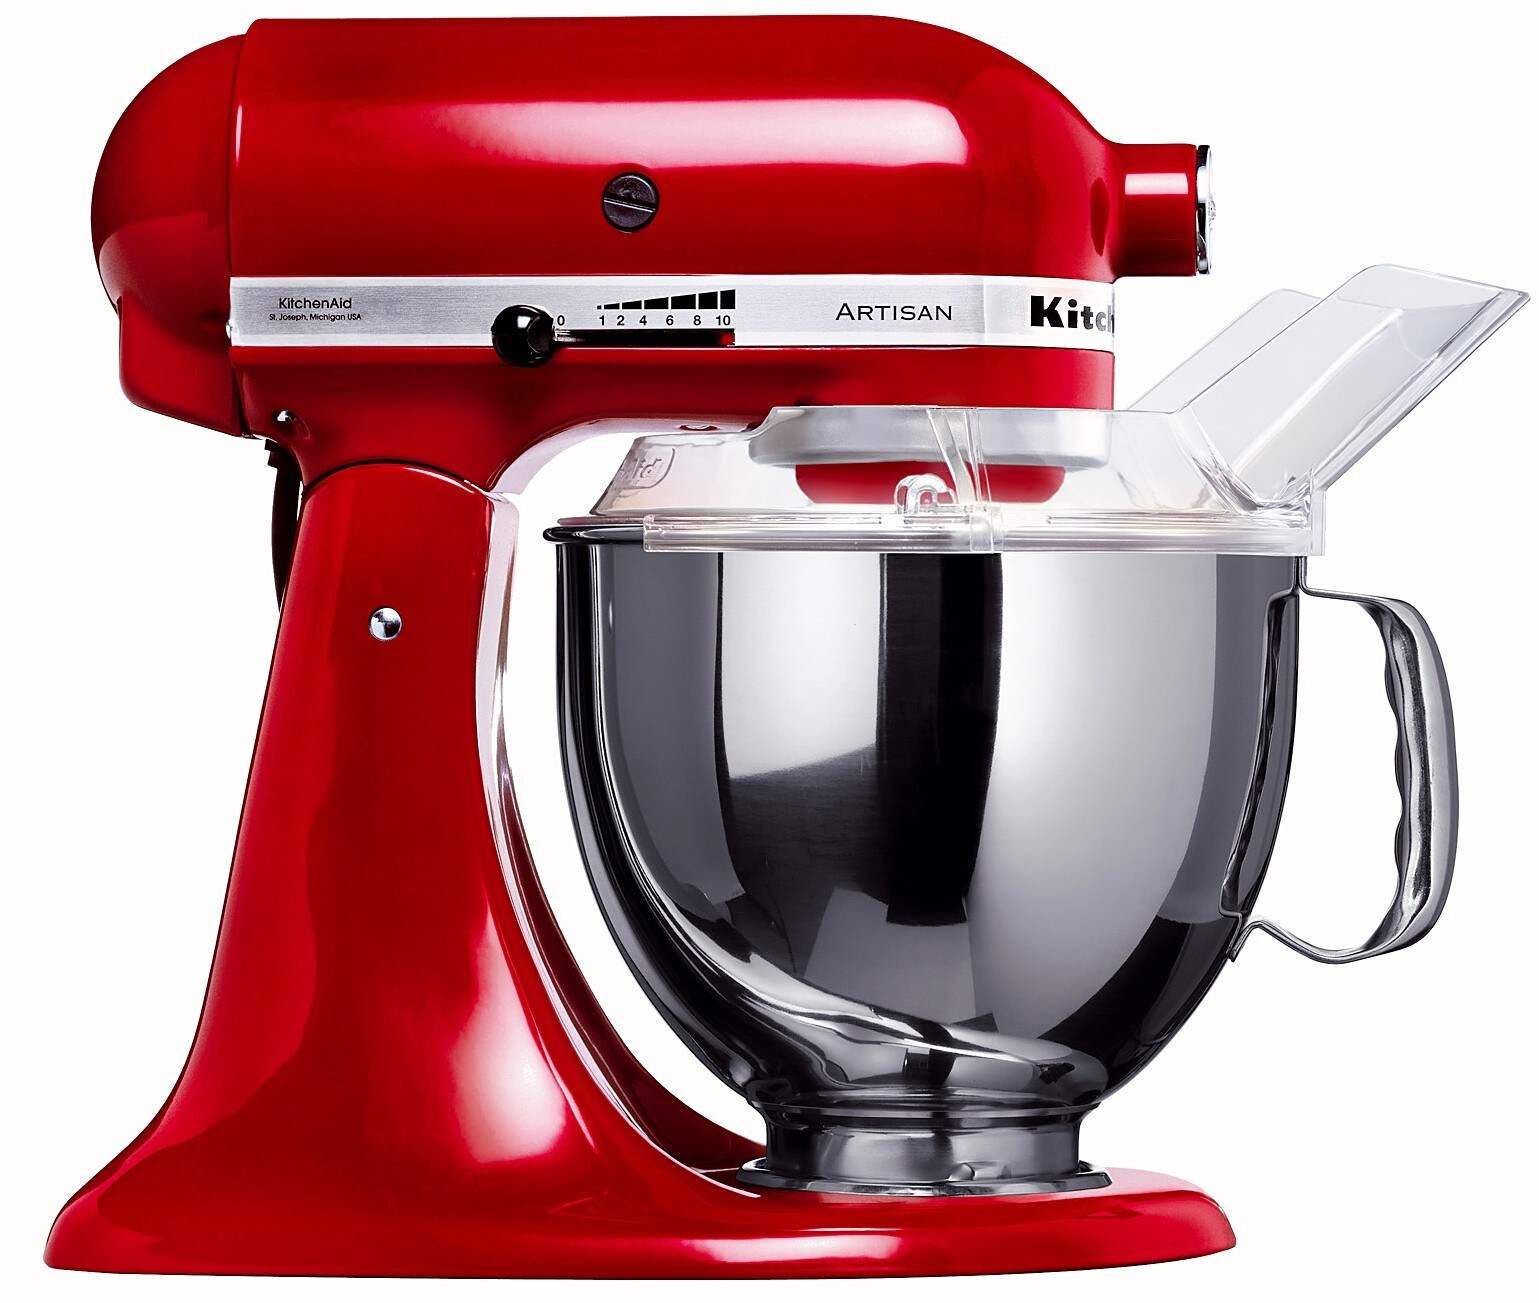 KitchenAid køkkenmaskine 5KSM150PSEER - rød - Køkkenmaskiner ...